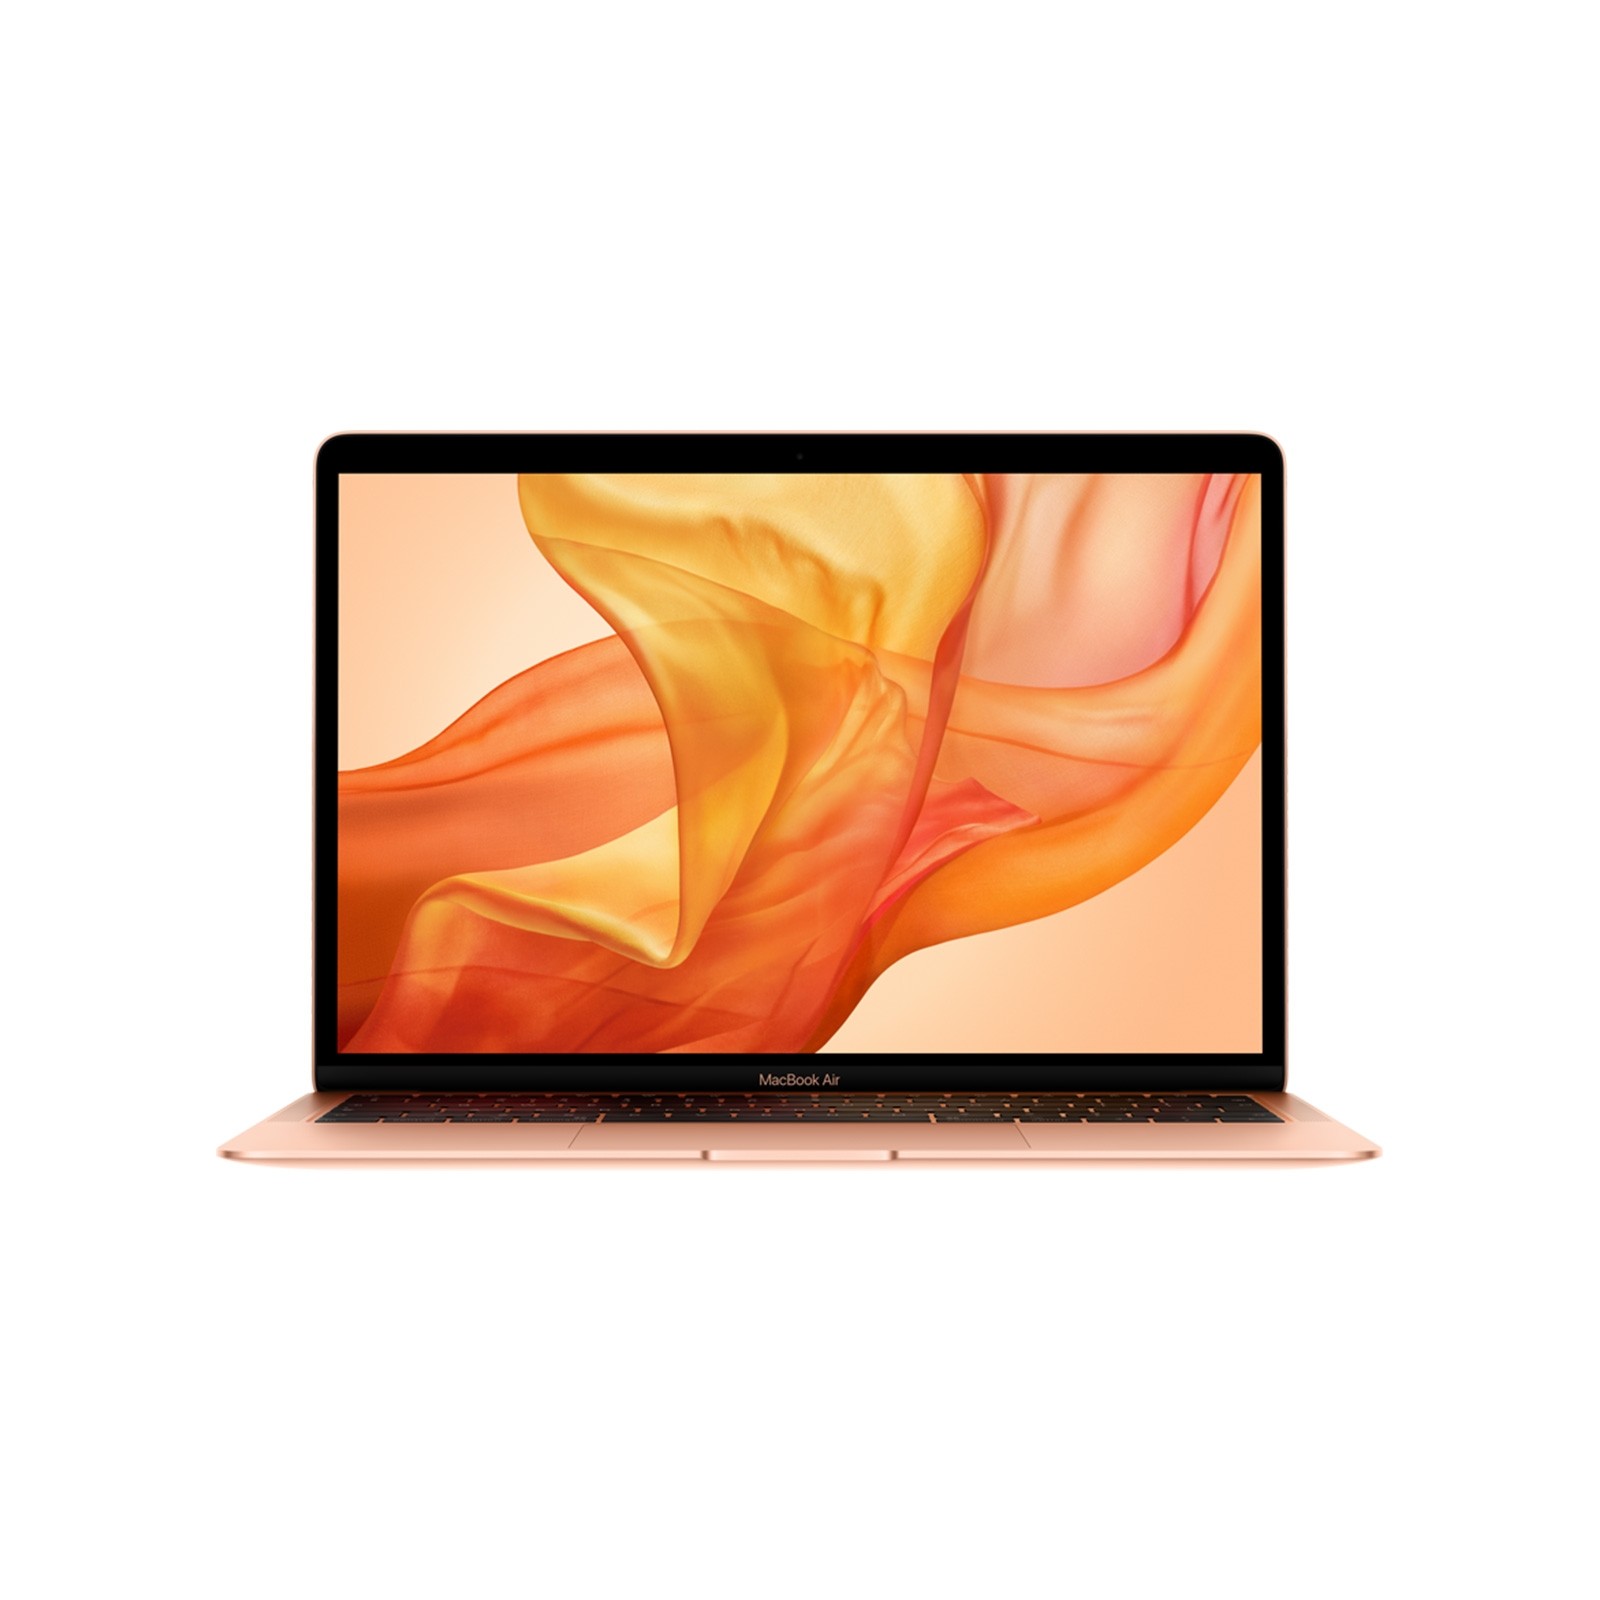 Apple MacBook Air 2019 13-inch 1.6GHz dual-core i5 128GB - Gold